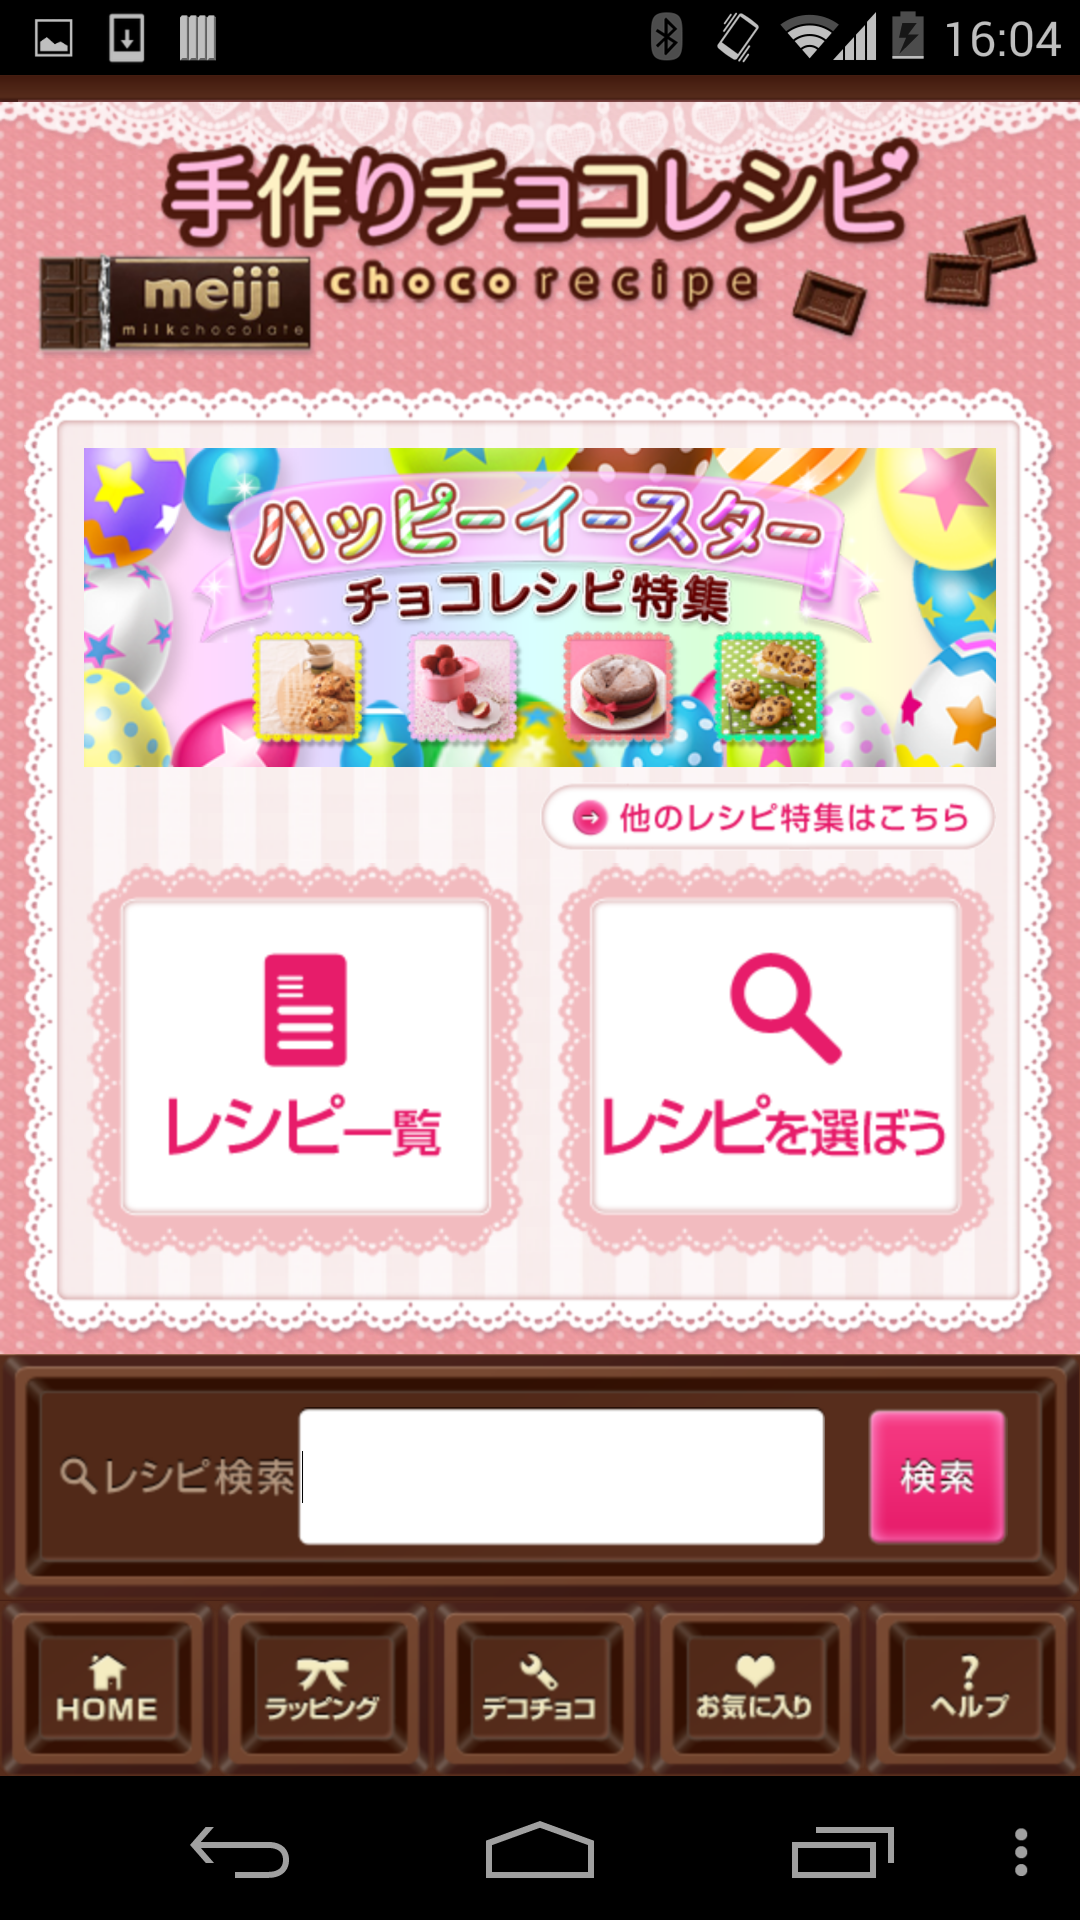 Android application 明治手作りチョコレシピ screenshort